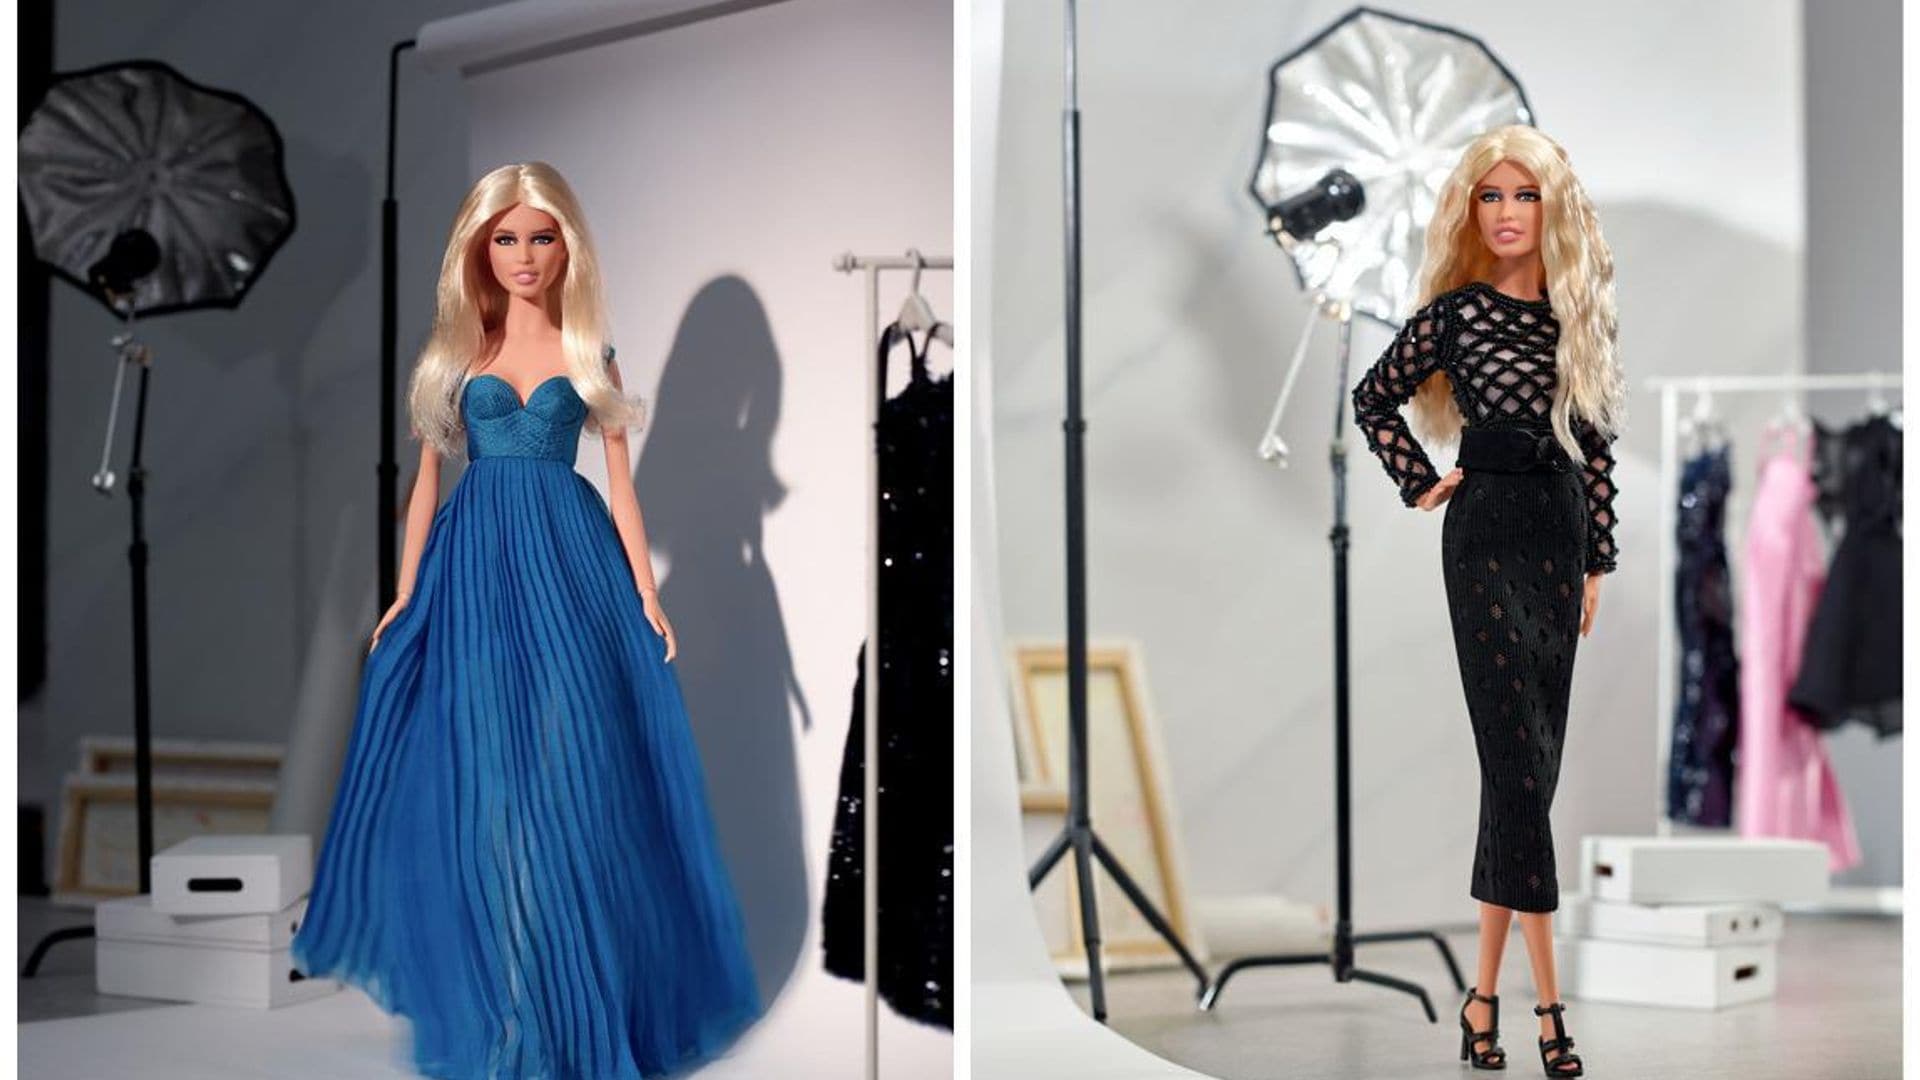 Claudia Schiffer's Barbie dressed in Versace